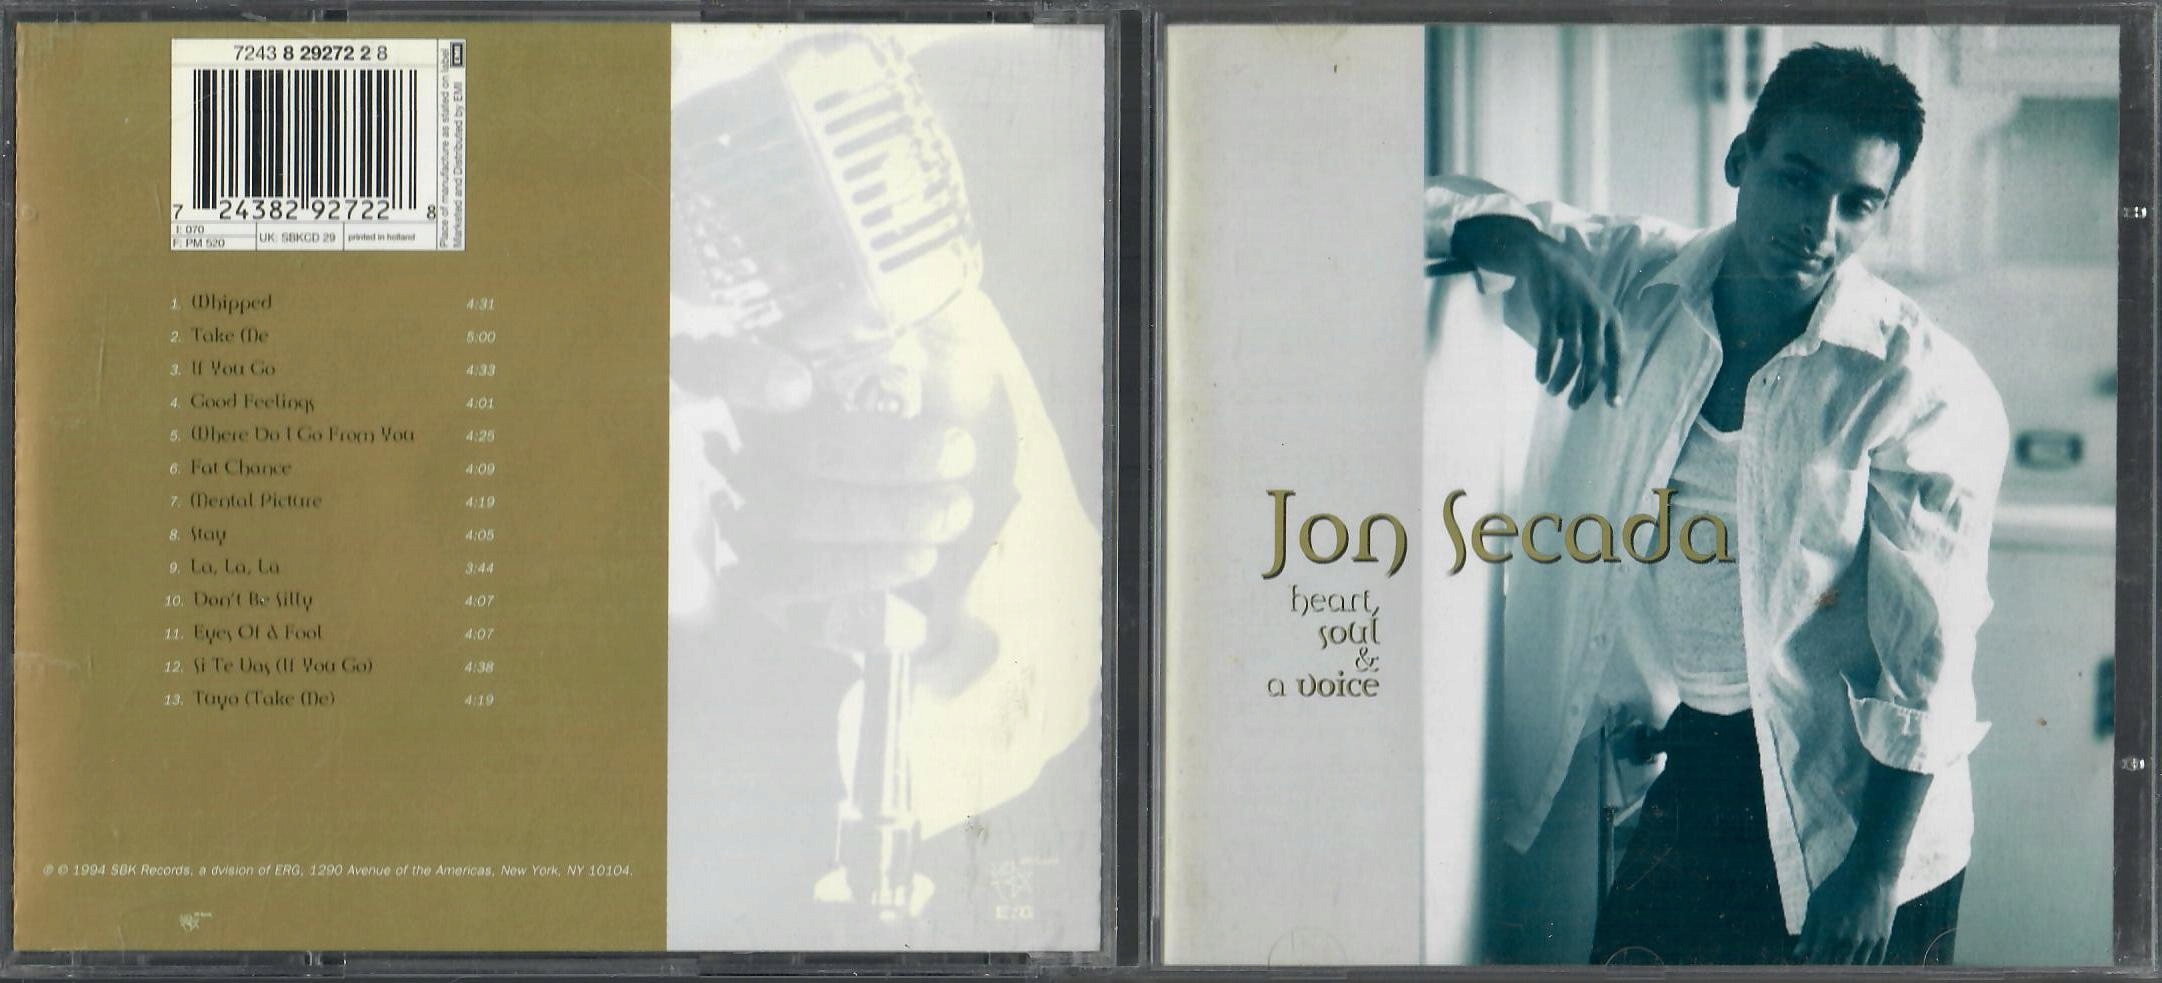 Jon Secada - Heart, Soul & A Voice CD Album